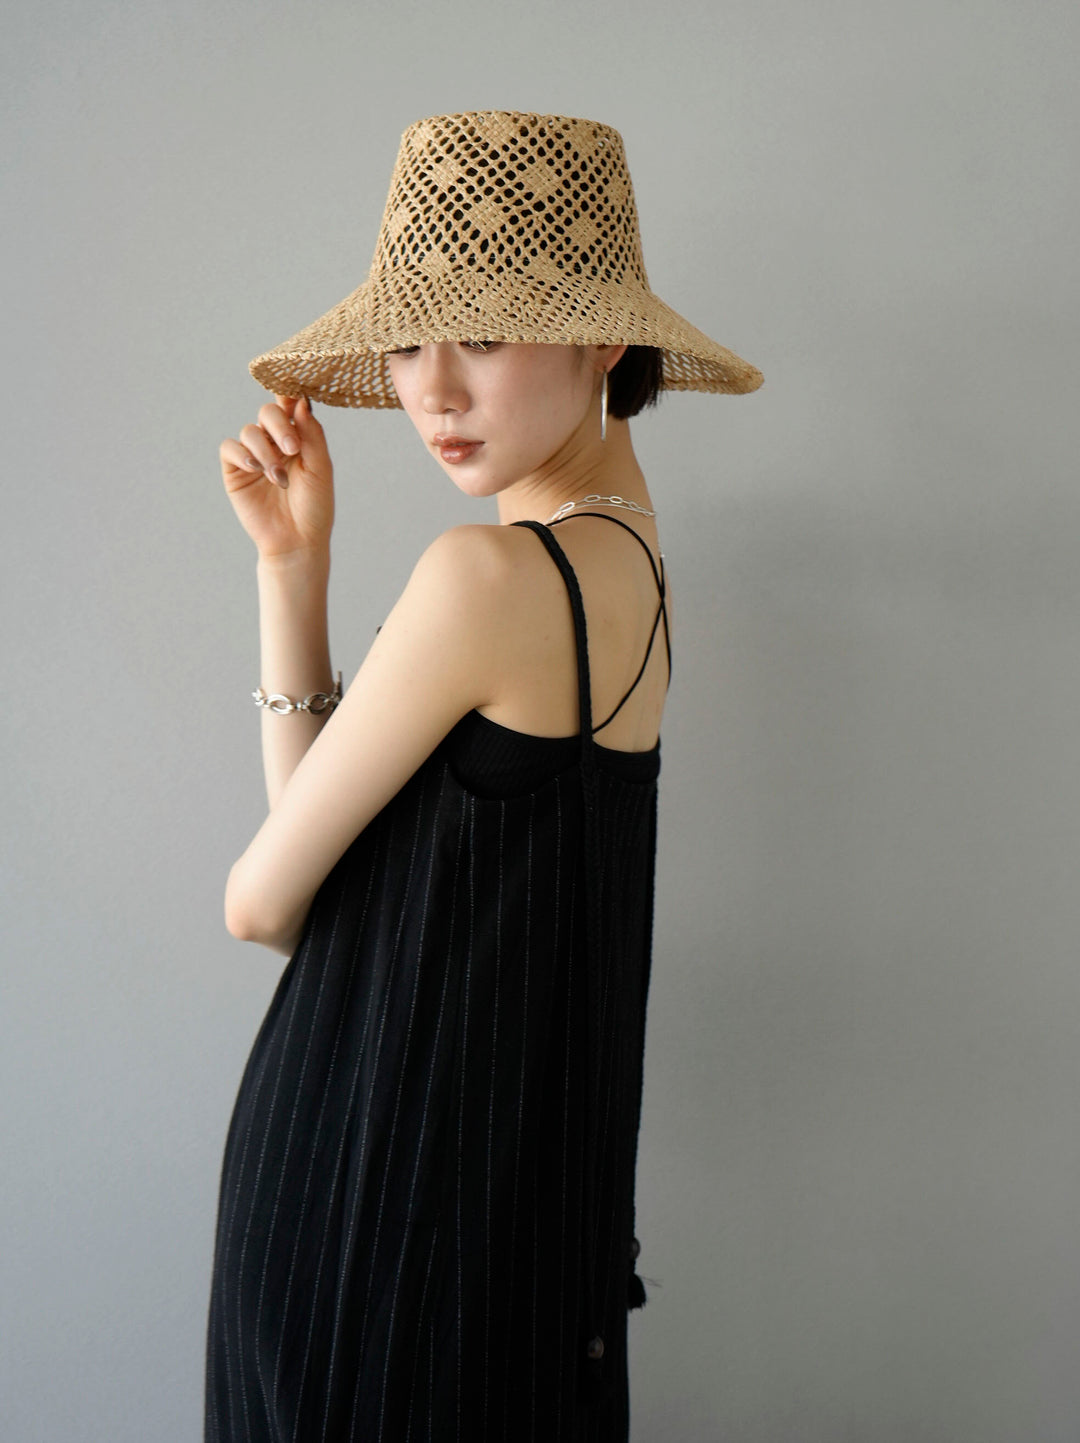 [SET] Cotton linen striped camisole dress + double strap cut ribbed bra camisole (2set)